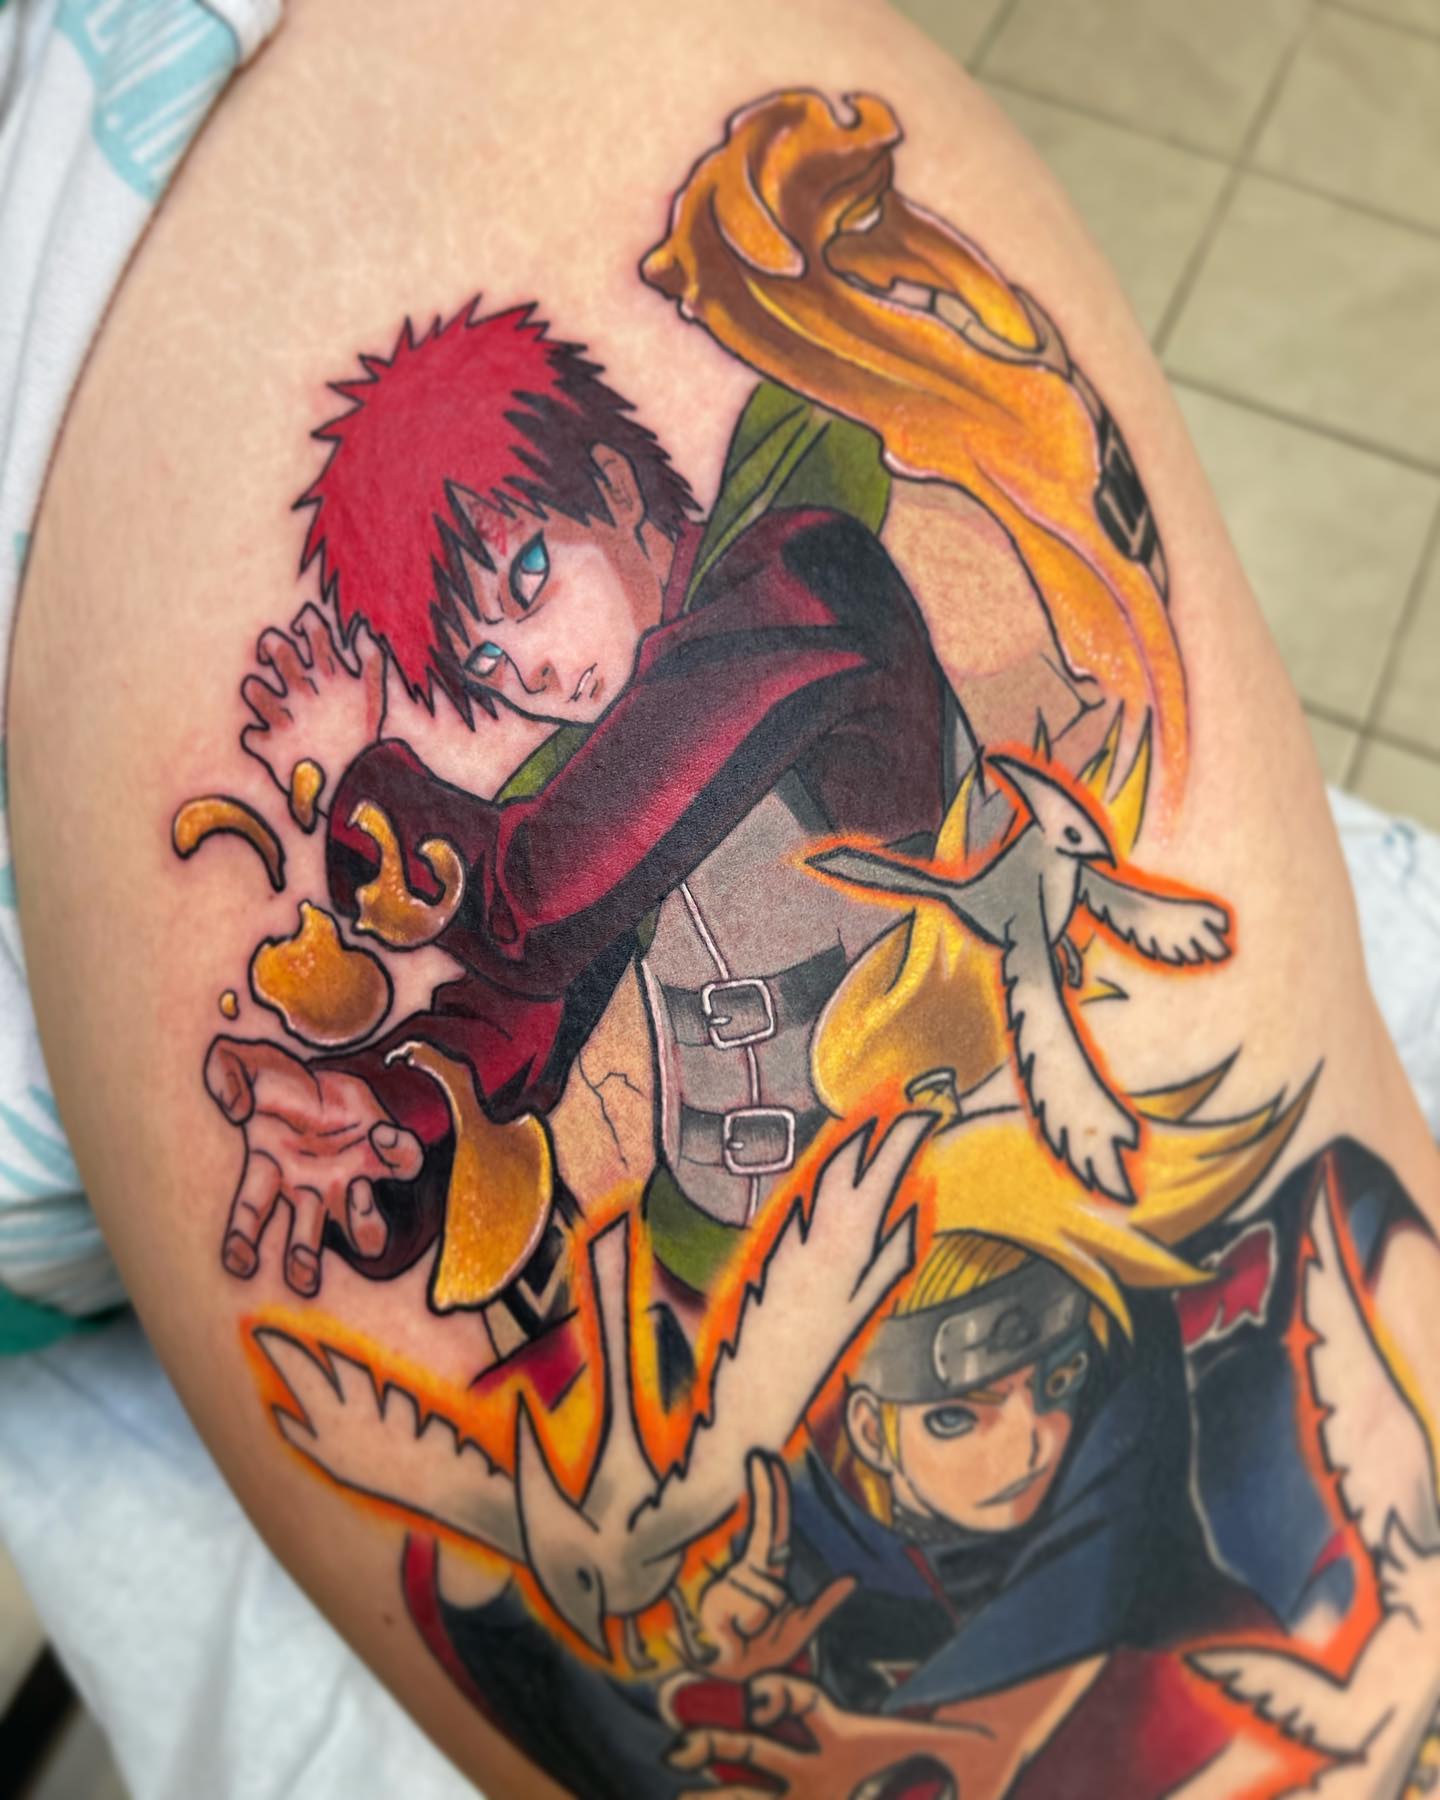 Tatuaje de Gaara inspirado en Naruto